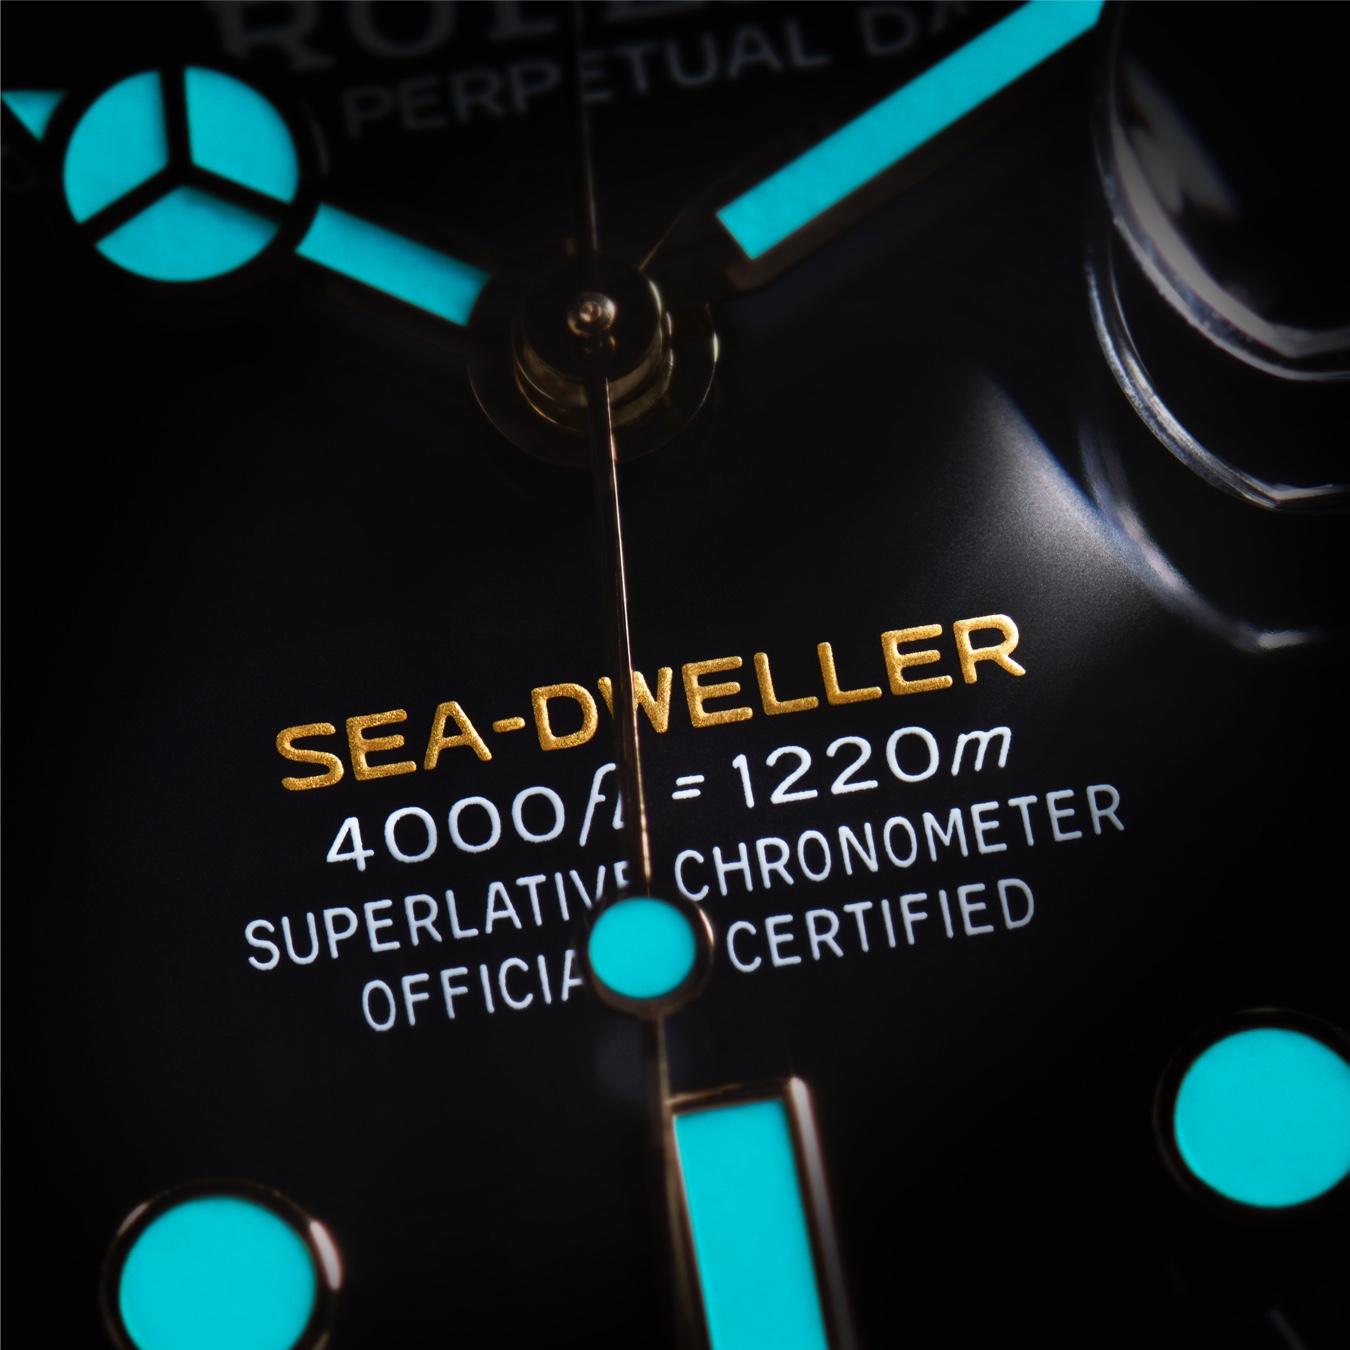 Rolex Oyster Perpetual Sea-Dweller